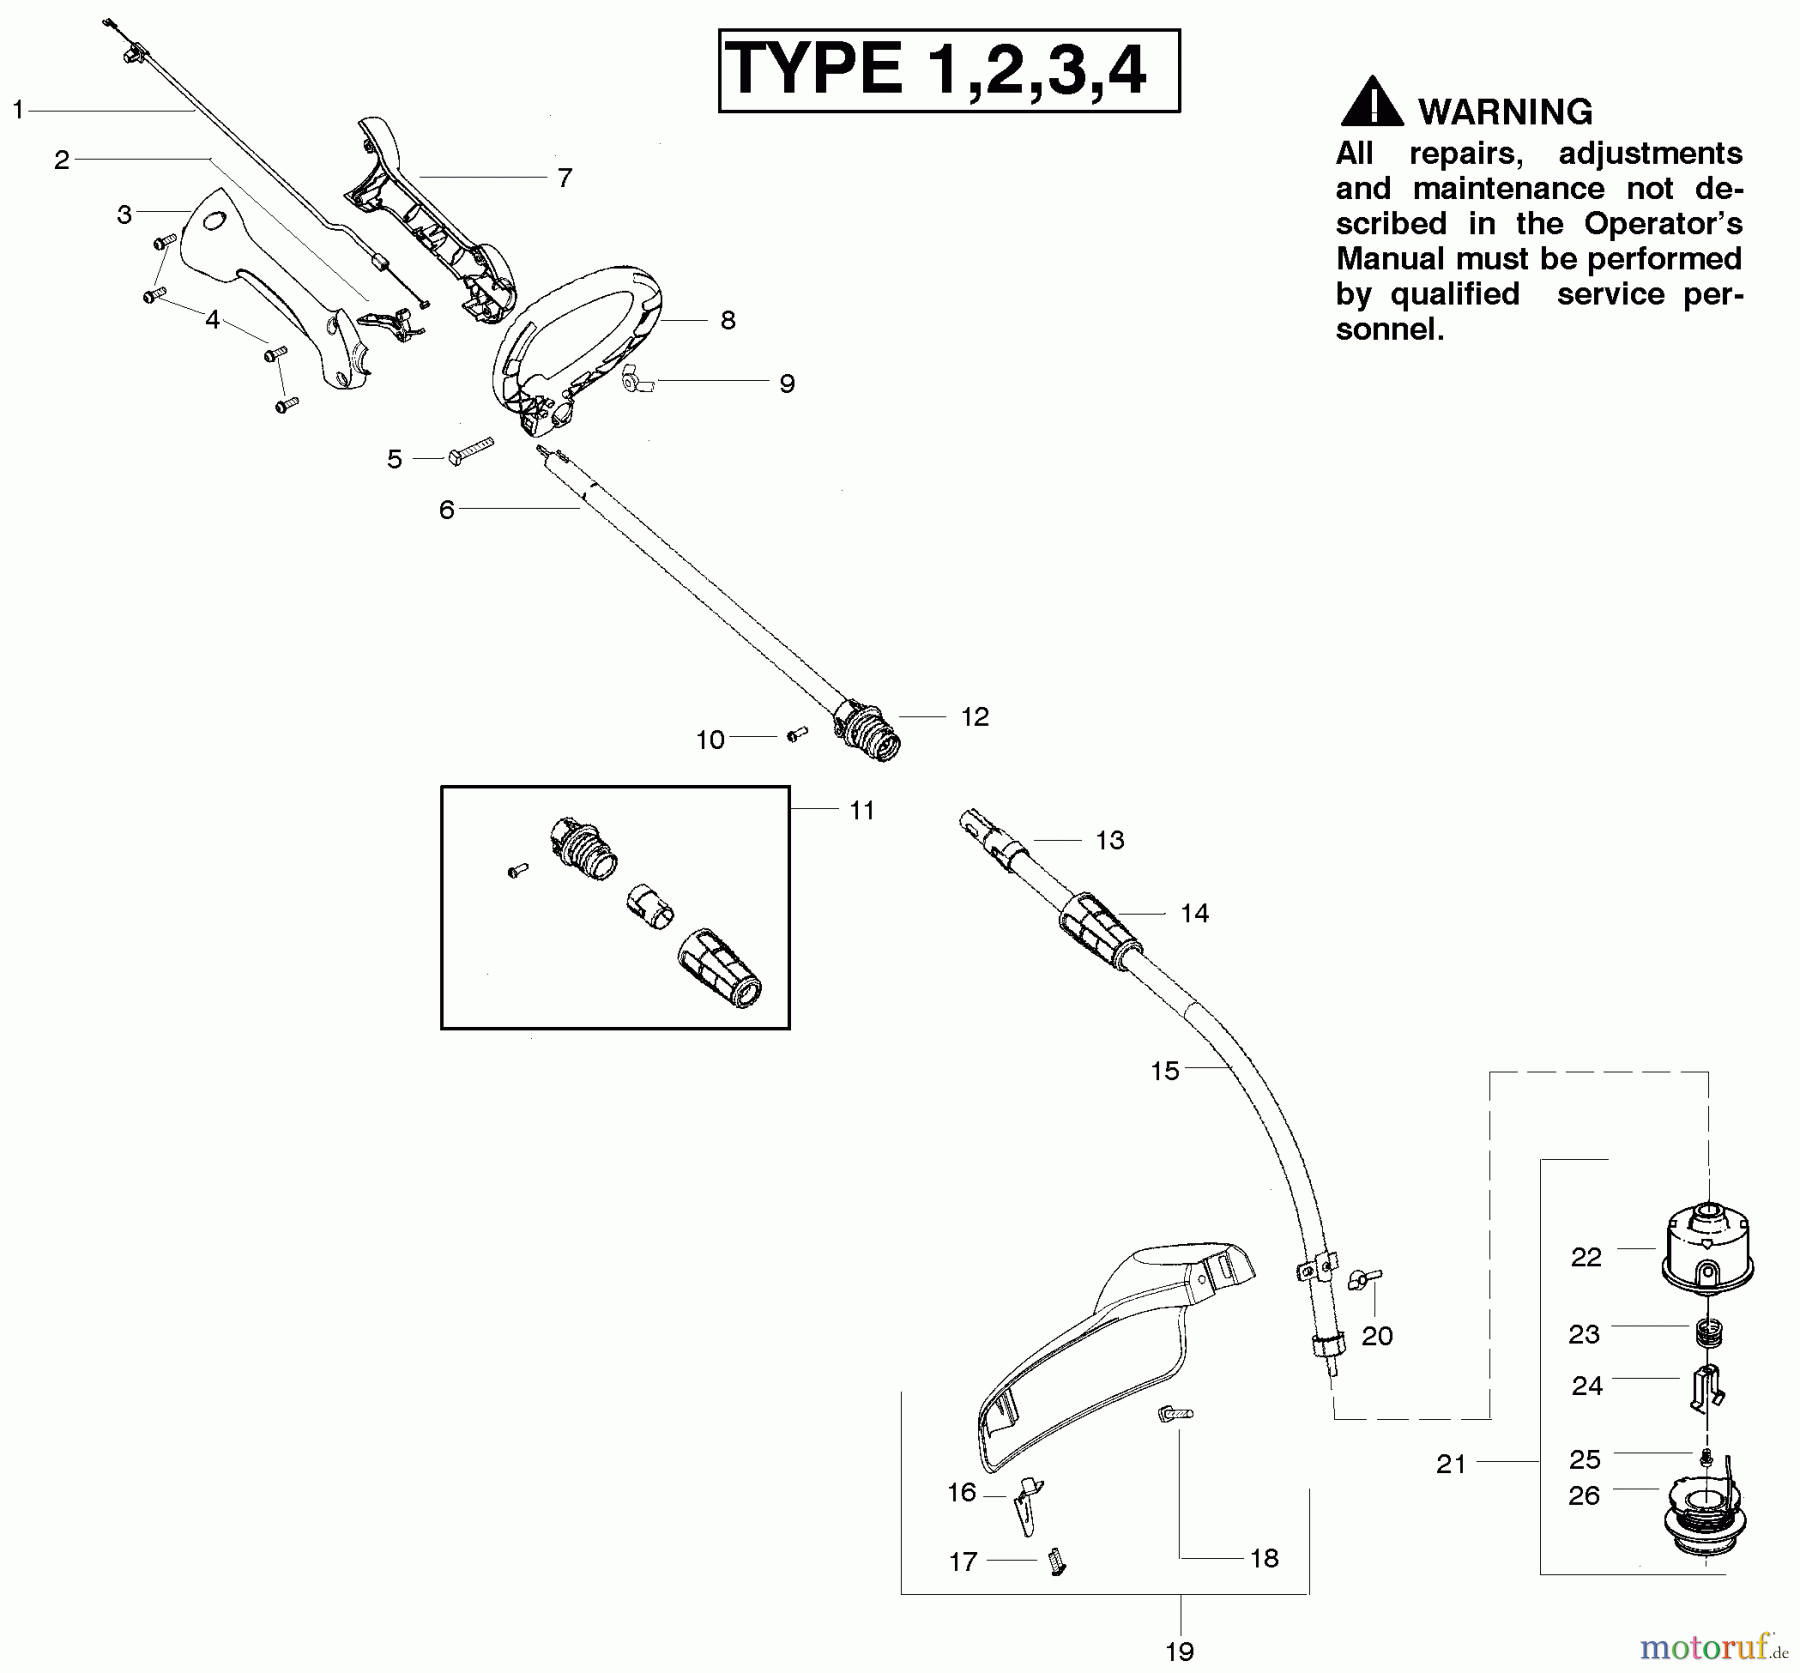  Poulan / Weed Eater Motorsensen, Trimmer FL20C (Type 1) - Weed Eater Featherlite String Trimmer Cutting Equipment Type 1,2,3,4